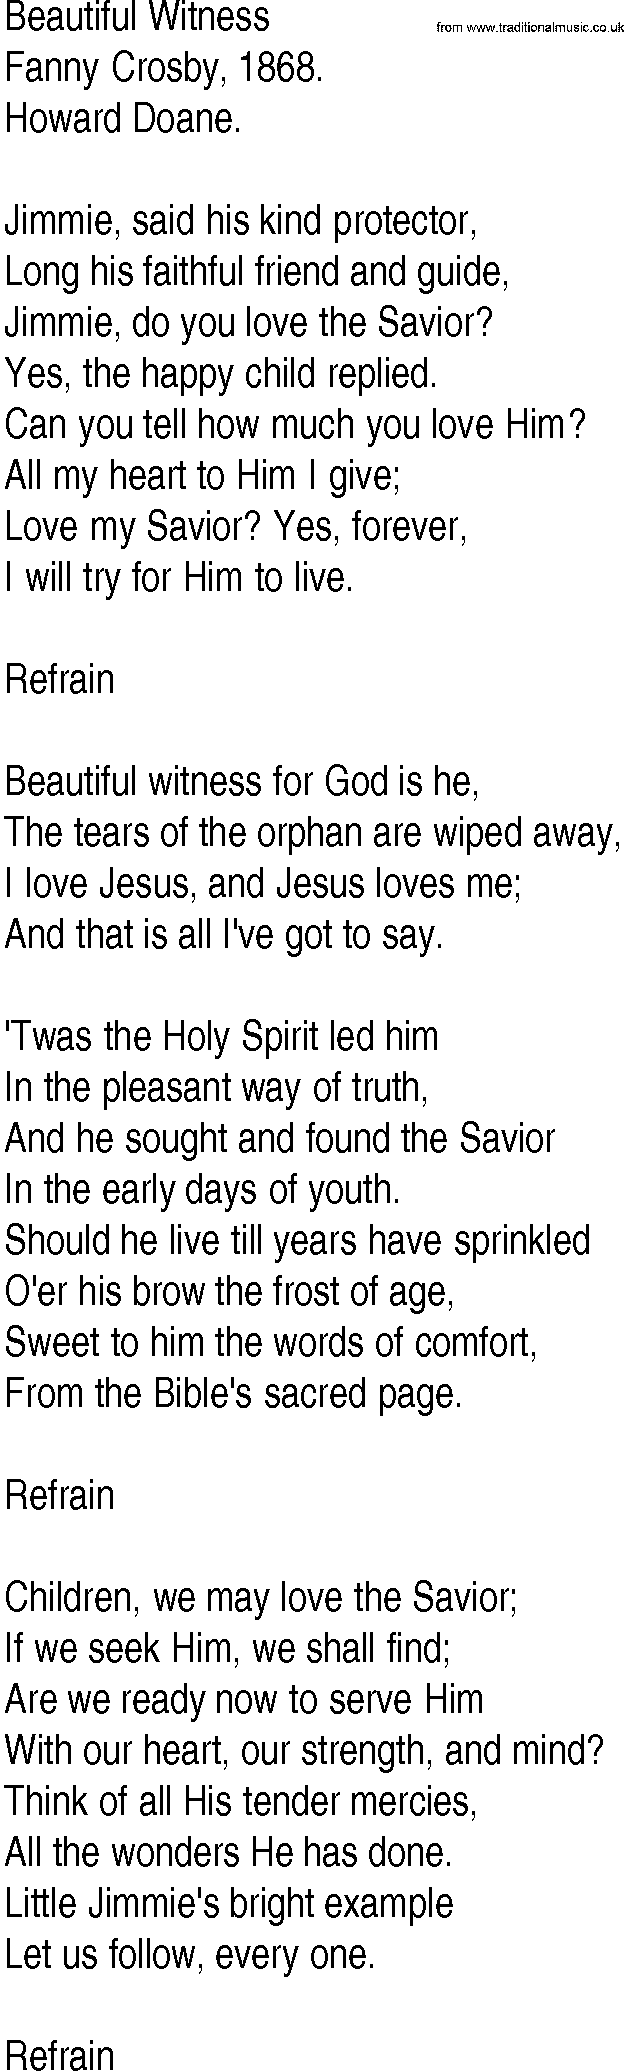 Hymn and Gospel Song: Beautiful Witness by Fanny Crosby lyrics